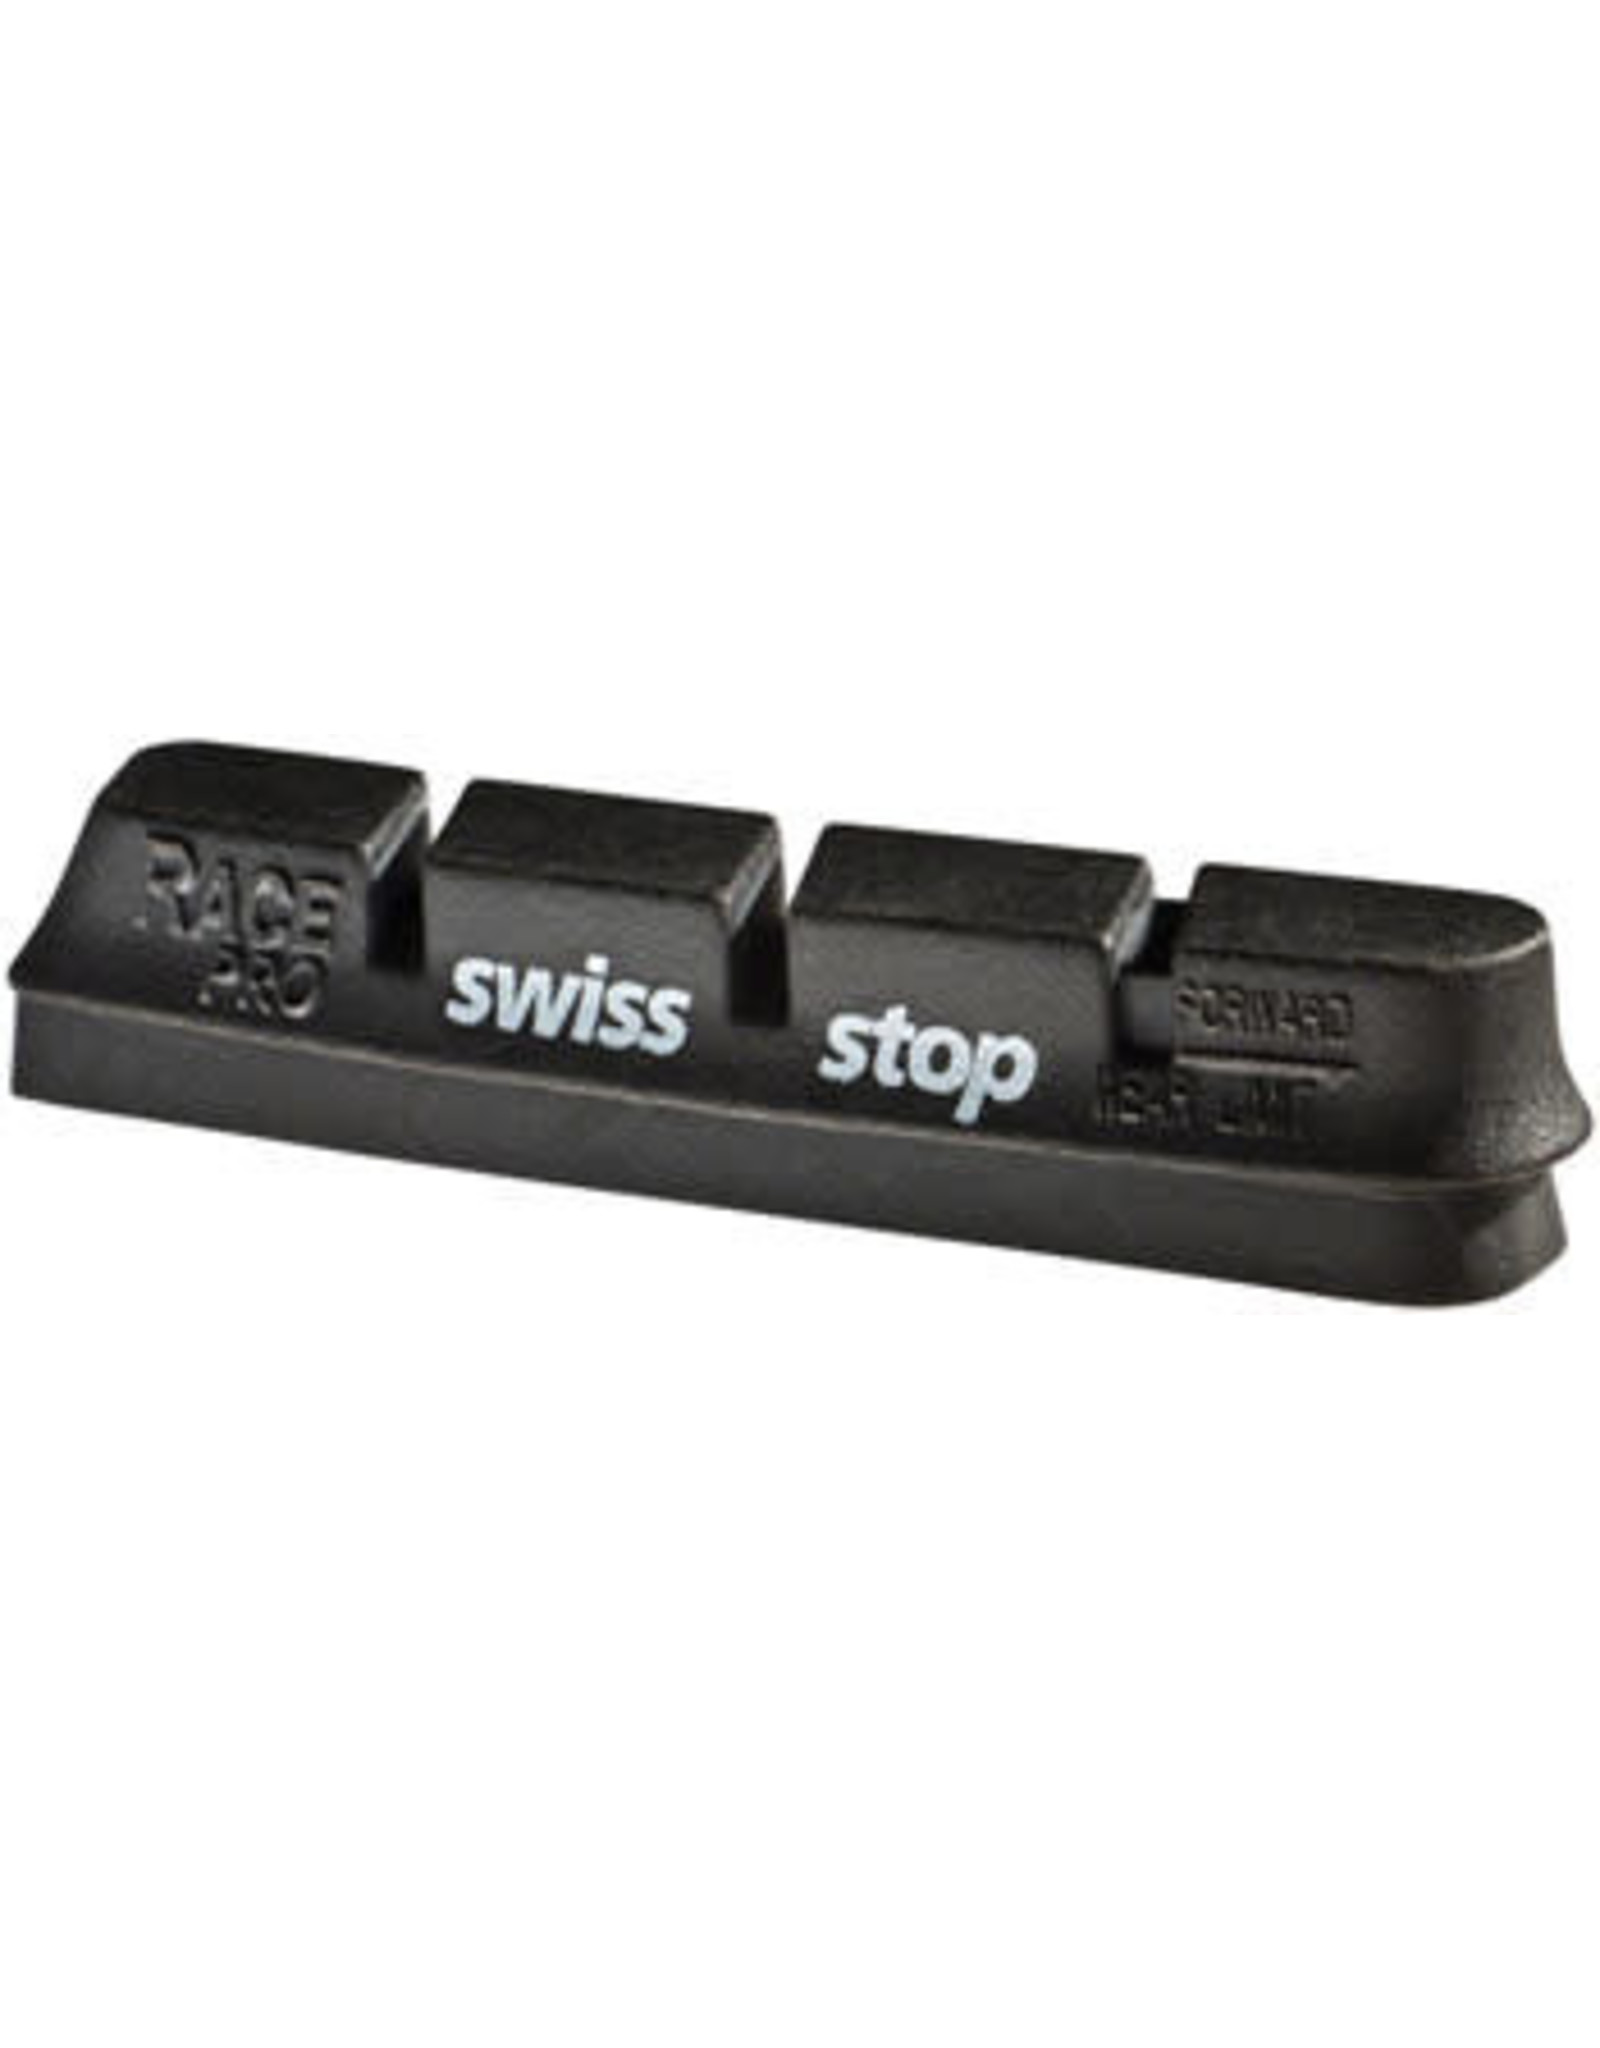 SwissStop SwissStop RacePro Set of 4 Campagnolo Rim Brake Inserts, Black